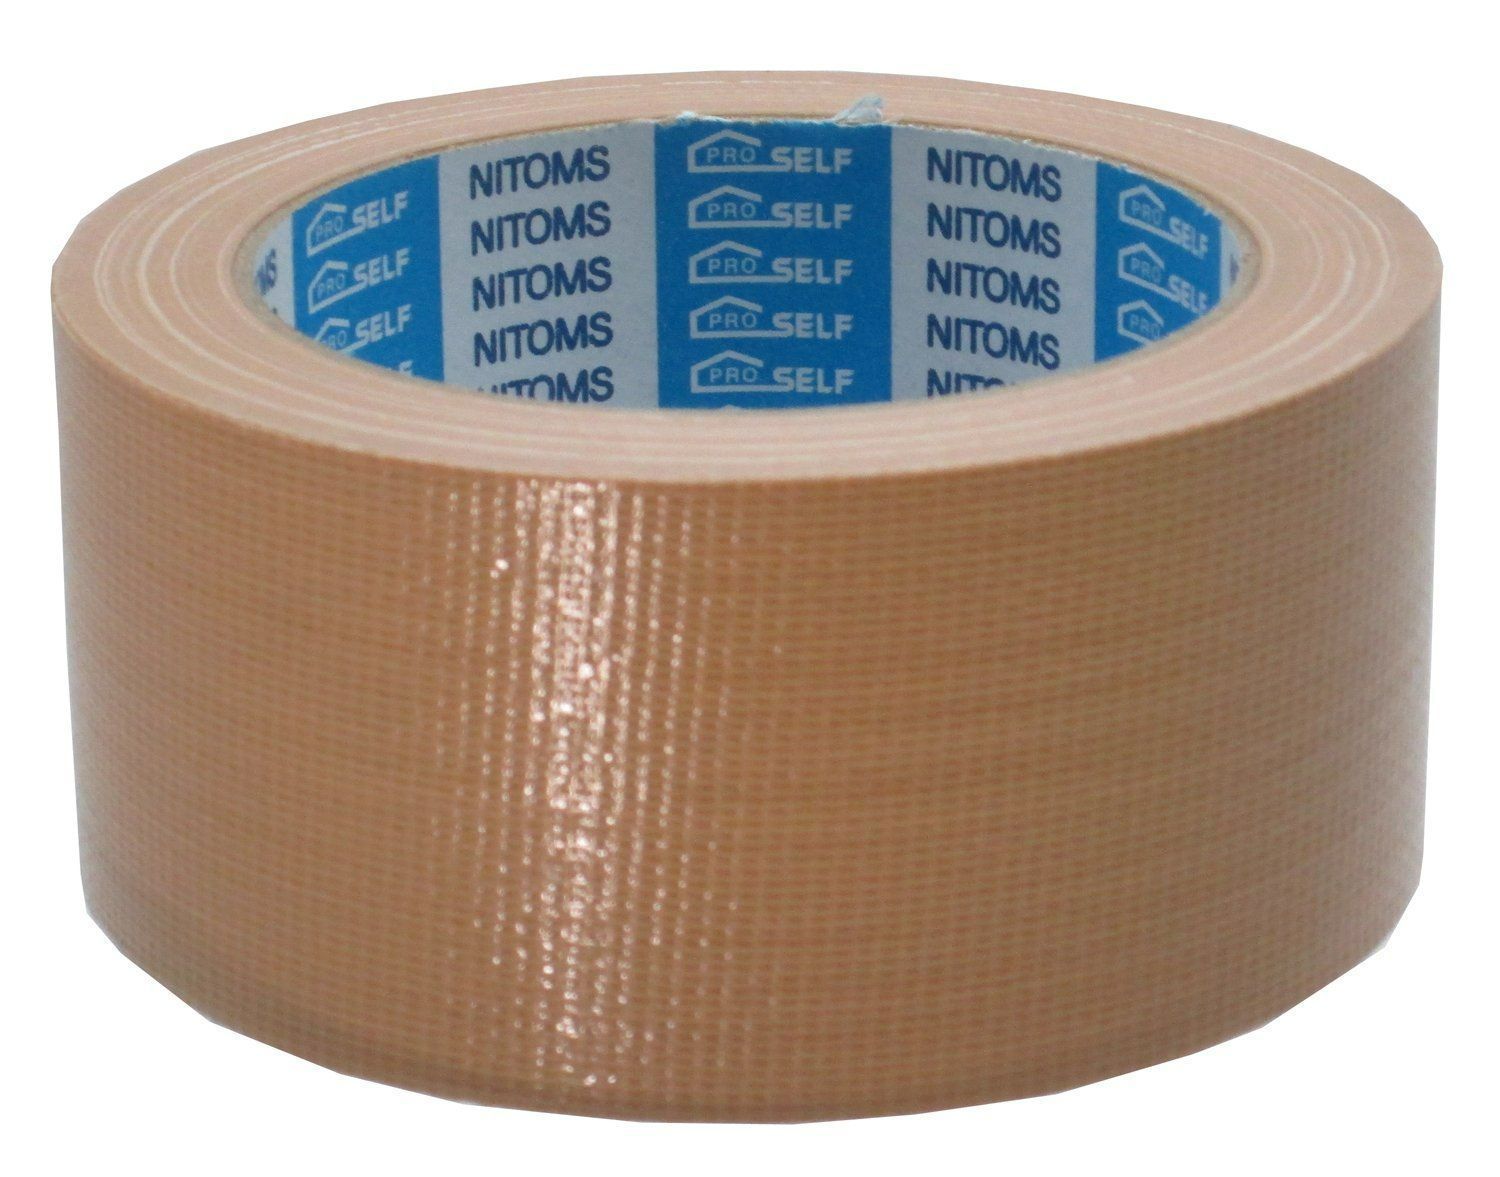 Nitto(ニトムズ) ガムテープ 布粘着テープ PK-30 ケース売り(30巻) 180μ×50mm×25m - 1